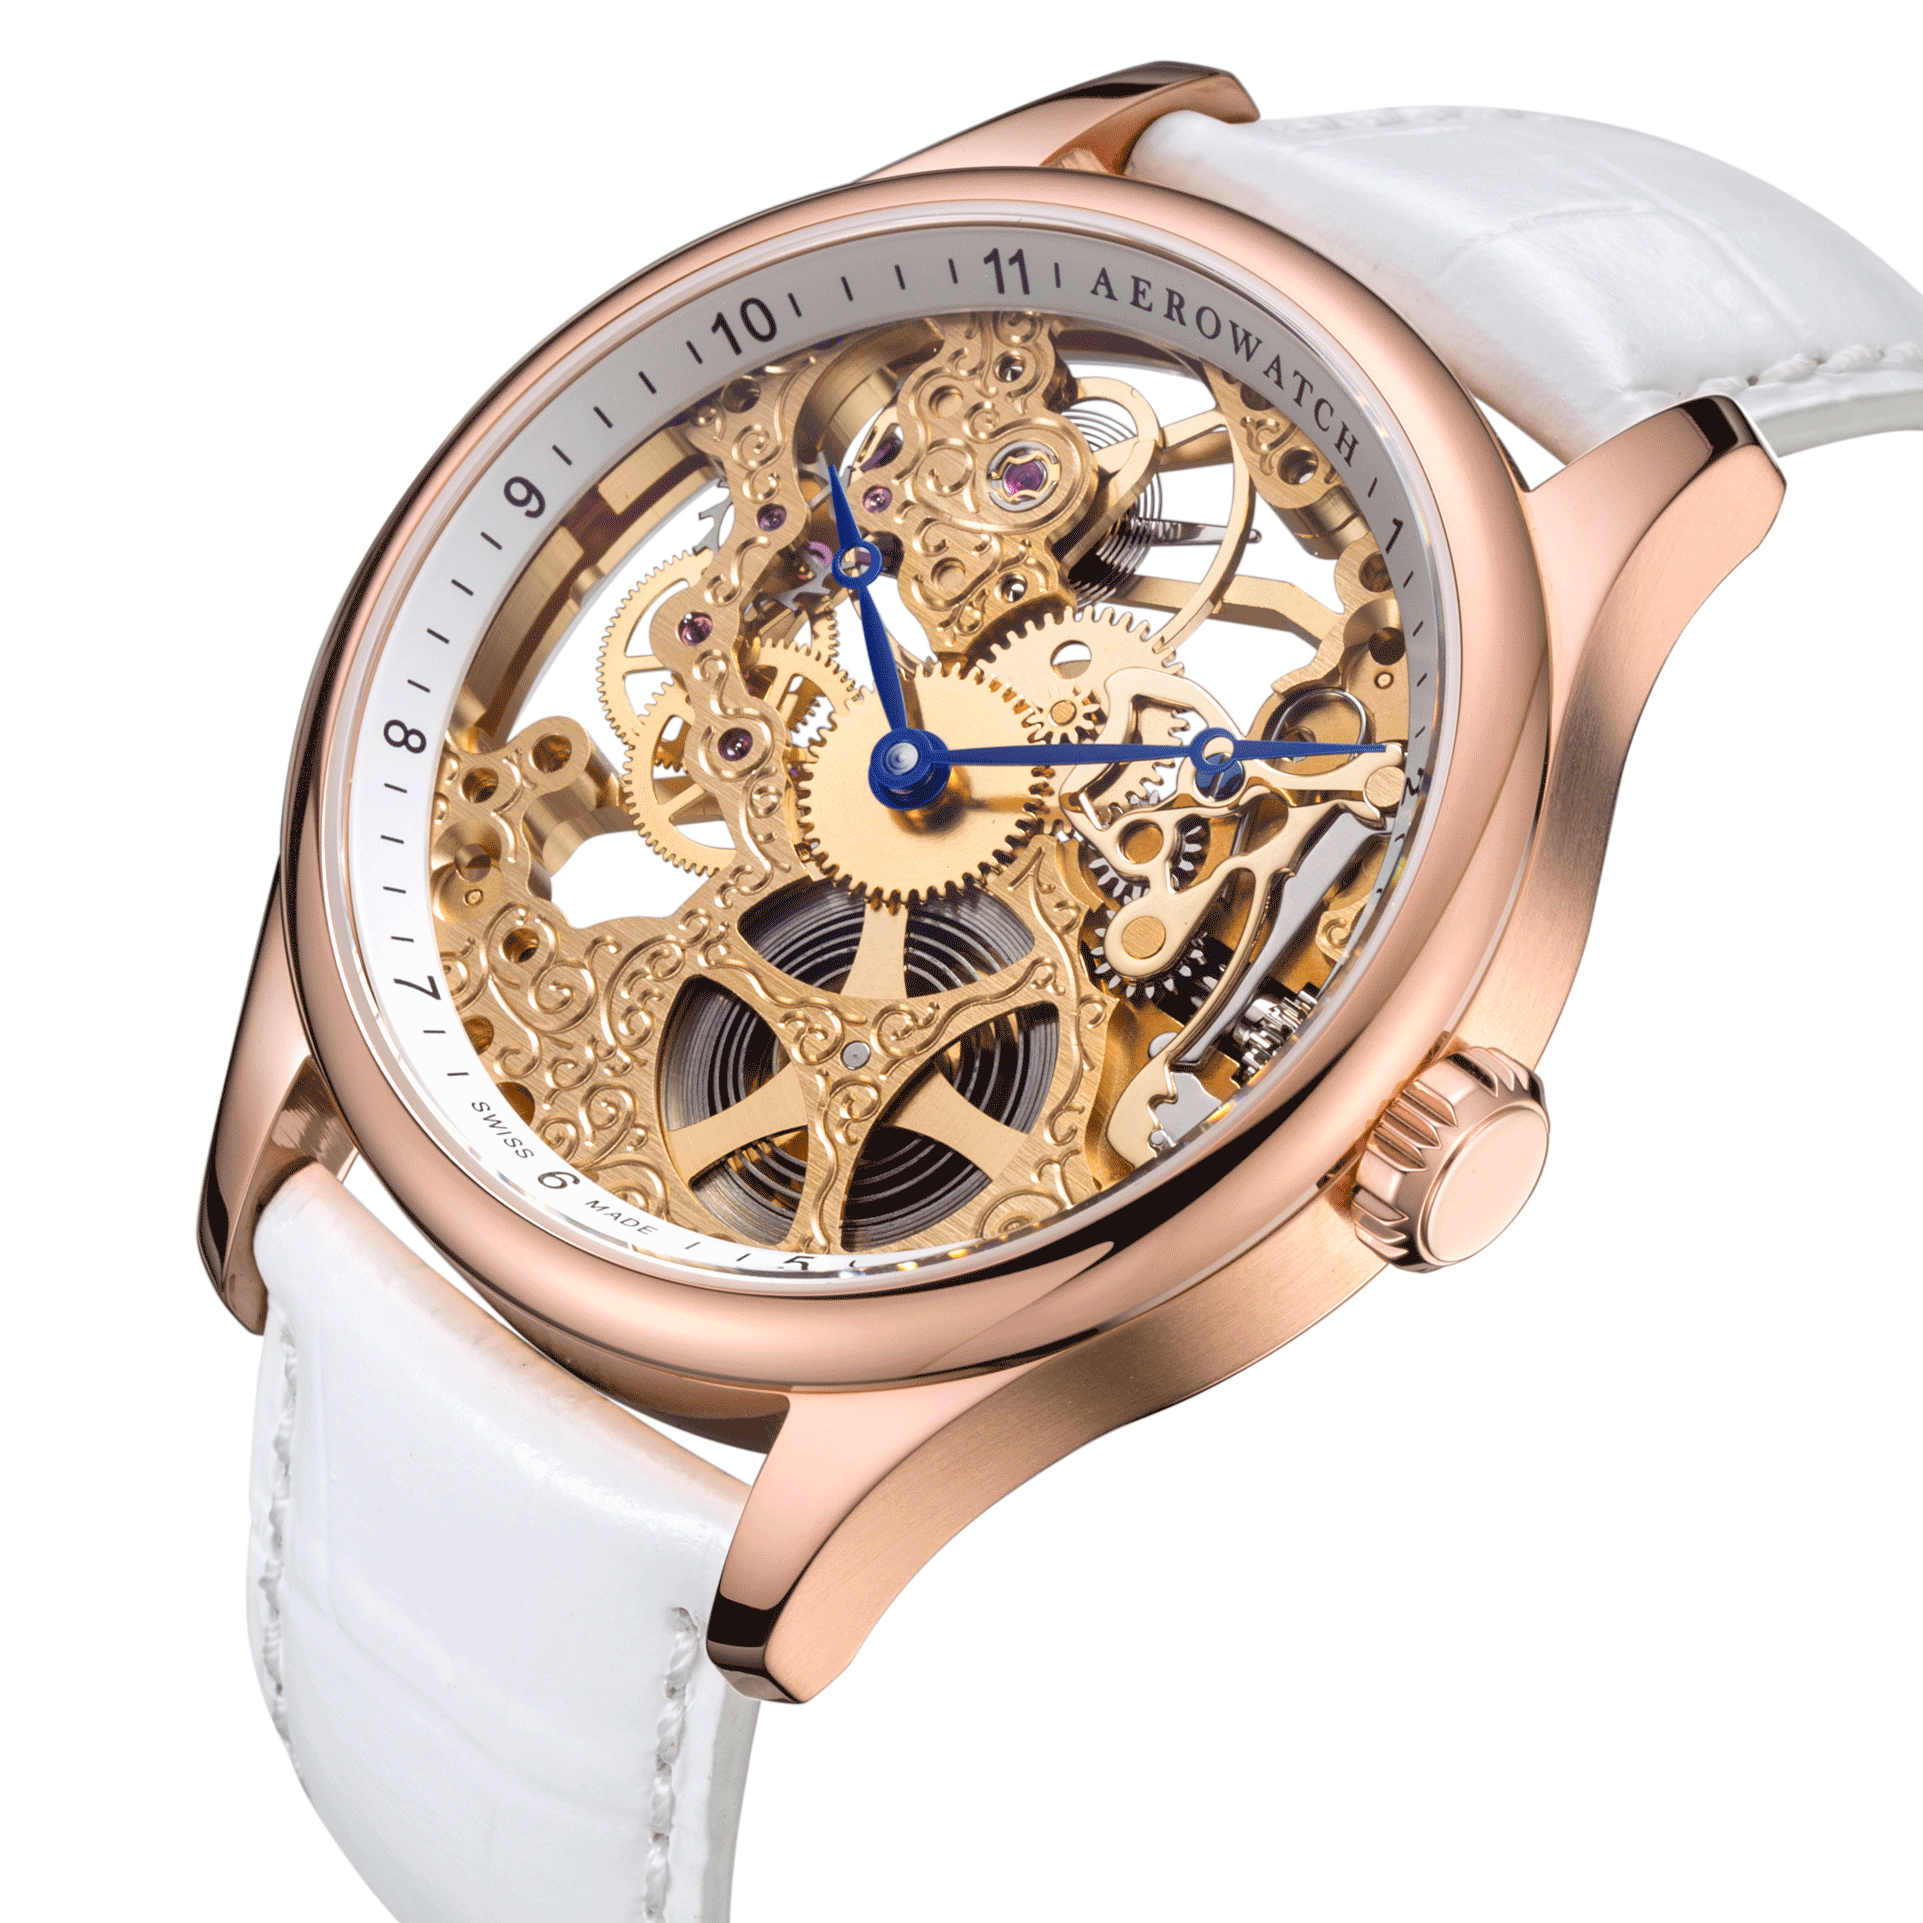 Скелетоны Aerowatch часы. Часы кварцевые Aerowatch скелетоны. Часы Орион скелетон. Часы BCBGMAXAZRIA скелетоны женские. Часы прозрачные наручные